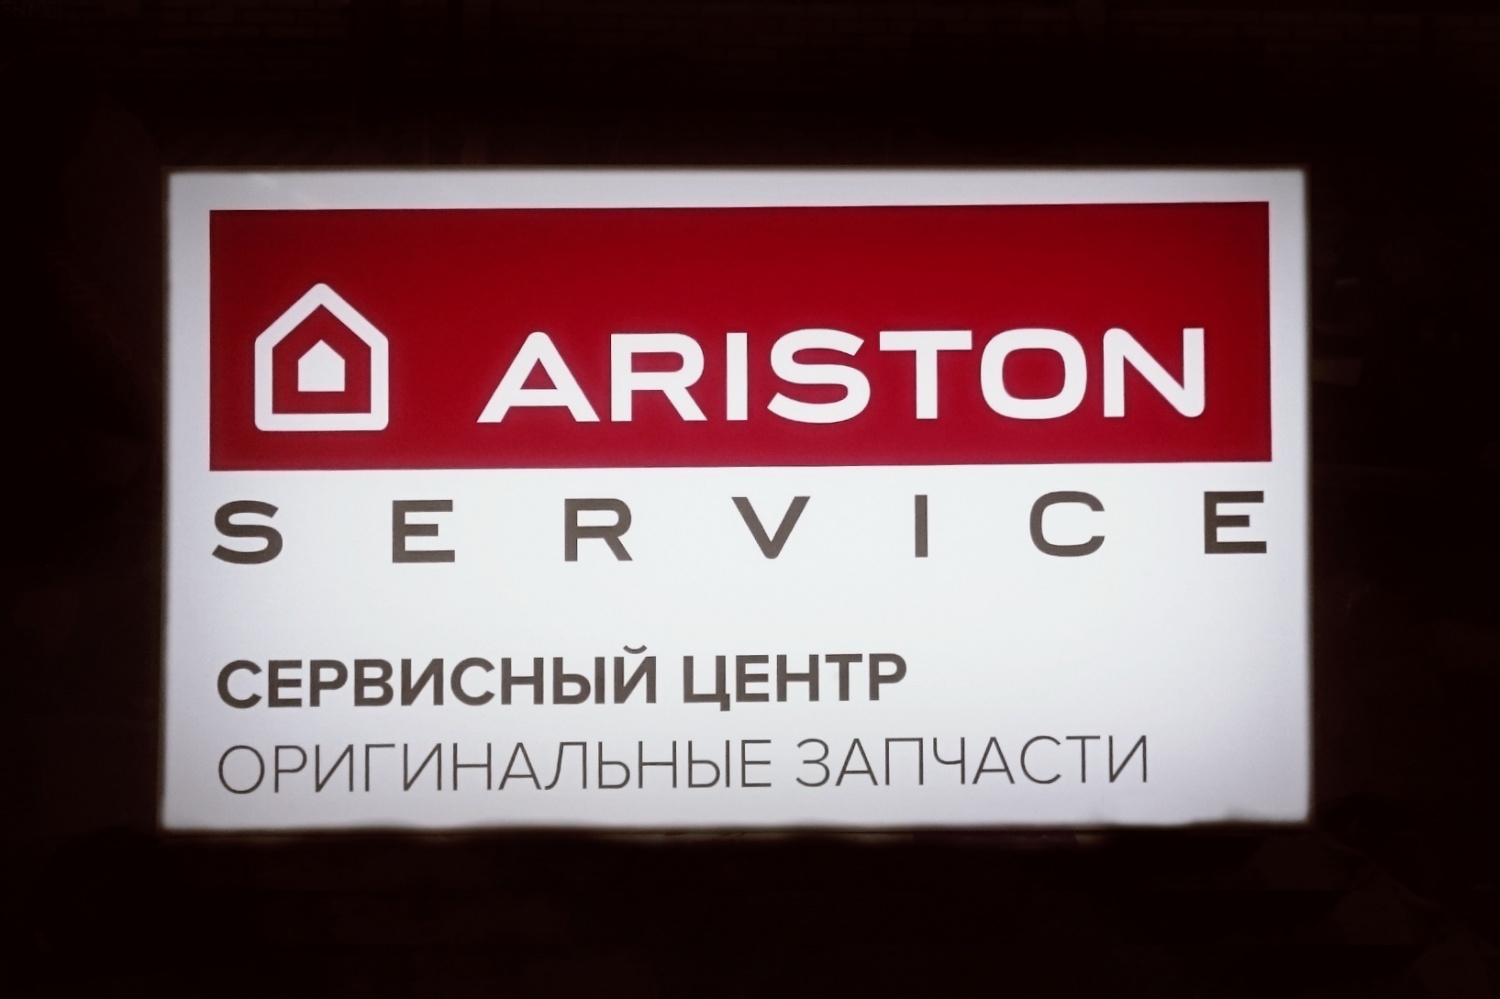 Ariston сервисные центры ariston help. Сервисный центр Ariston. Фирменный магазин Аристон. Запасные части Аристон. Аристон логотип.